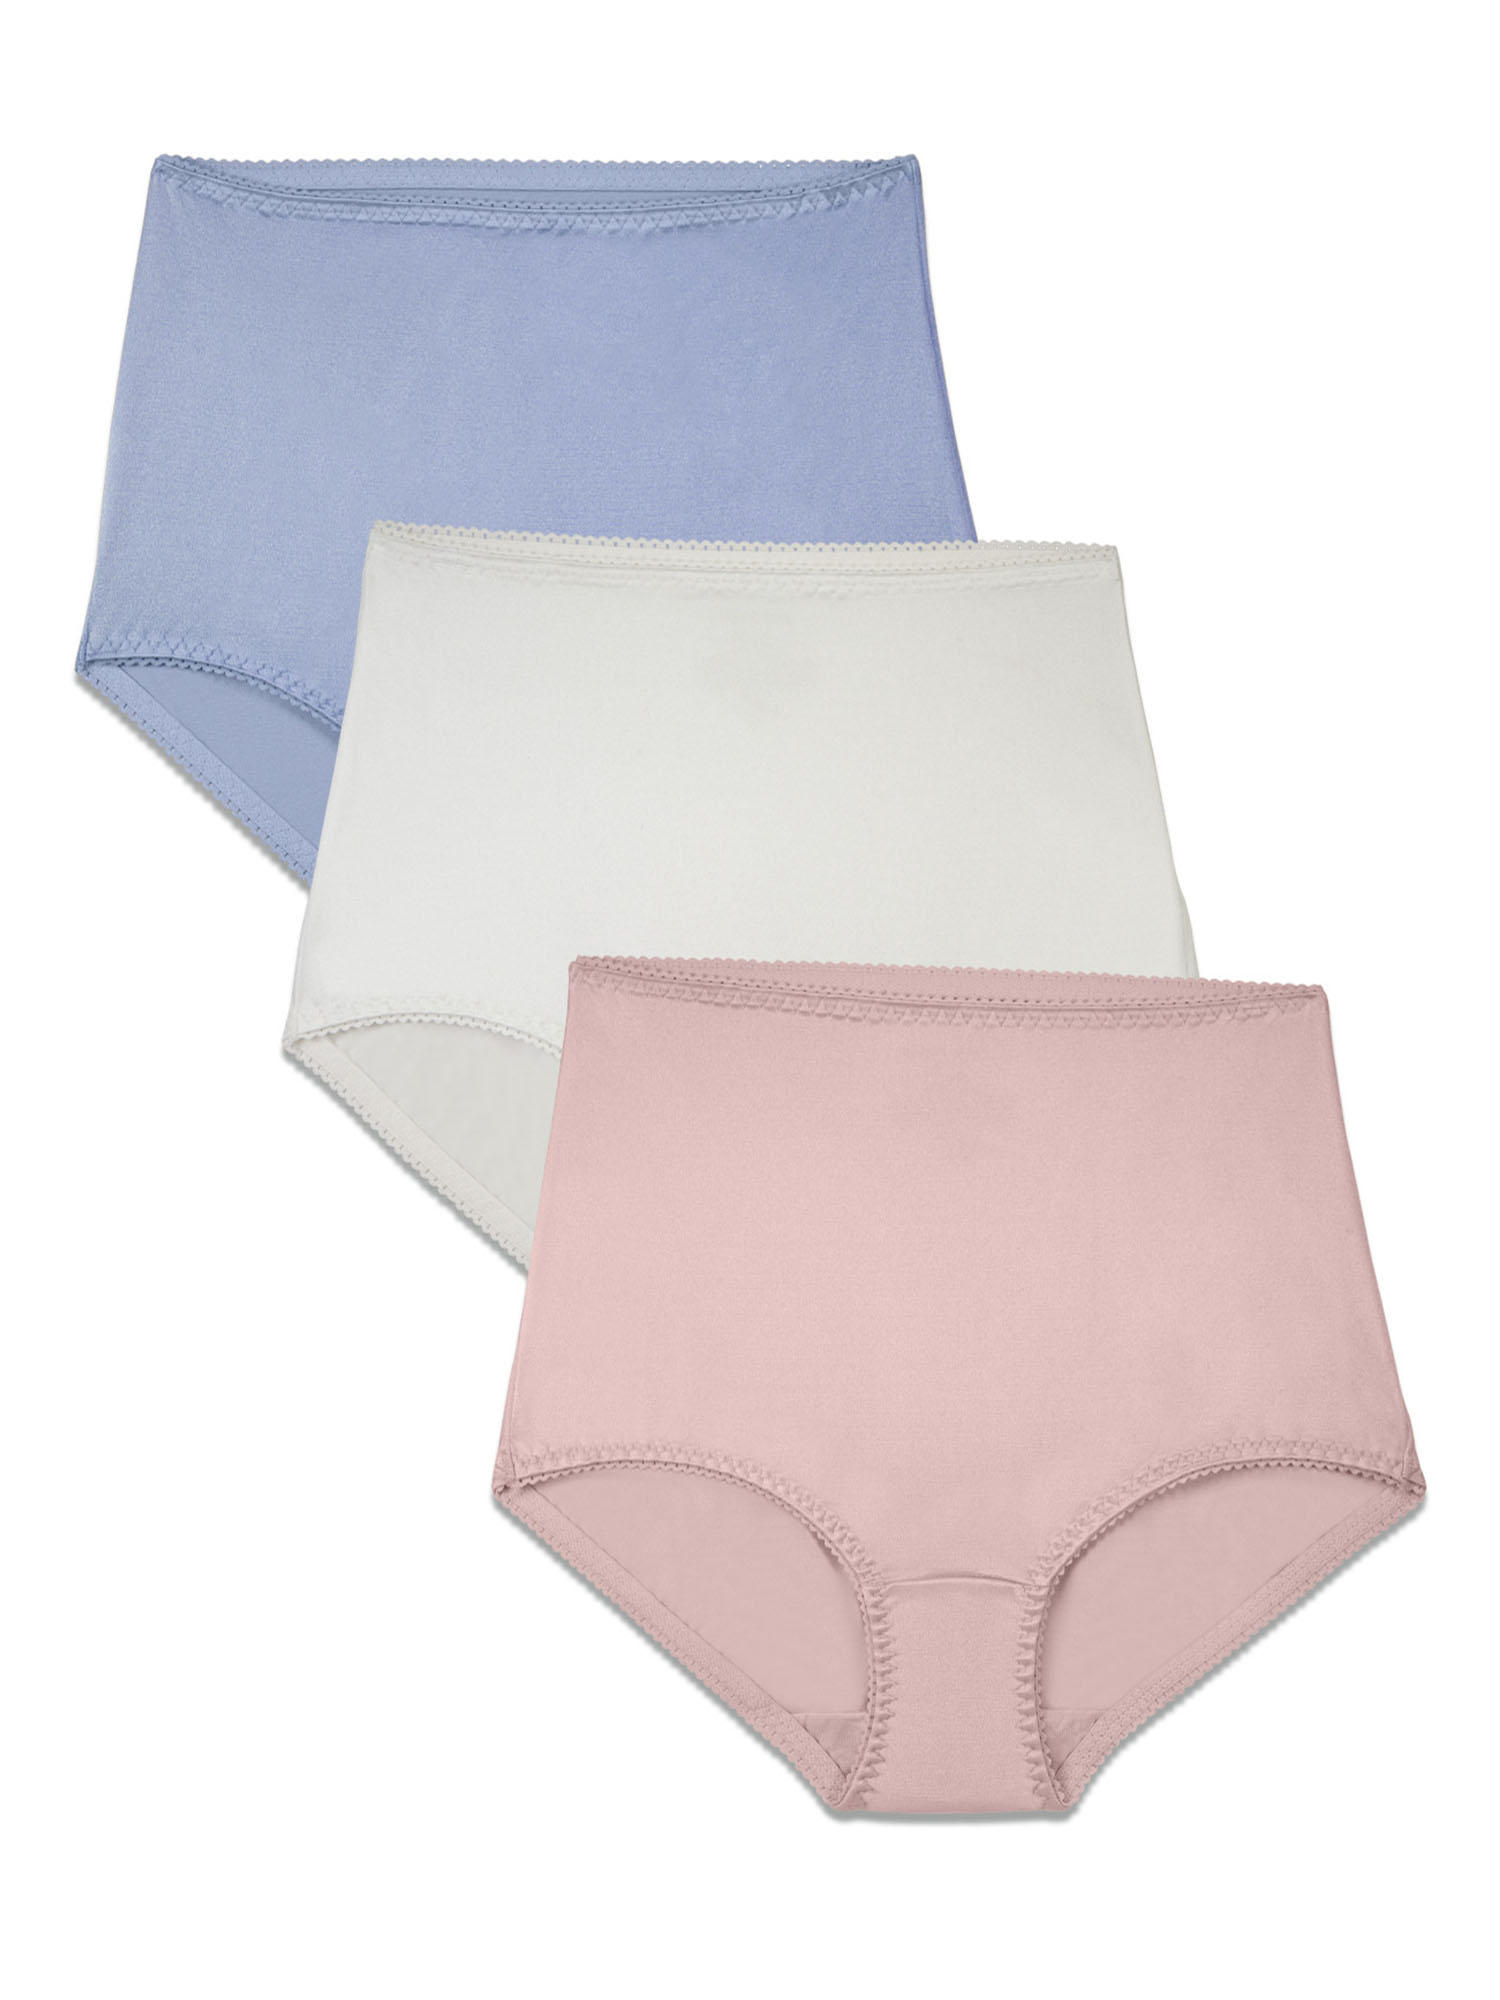 Vanity Fair Radiant Collection Women's Undershapers Brief Underwear, 3 Pack - image 1 of 12